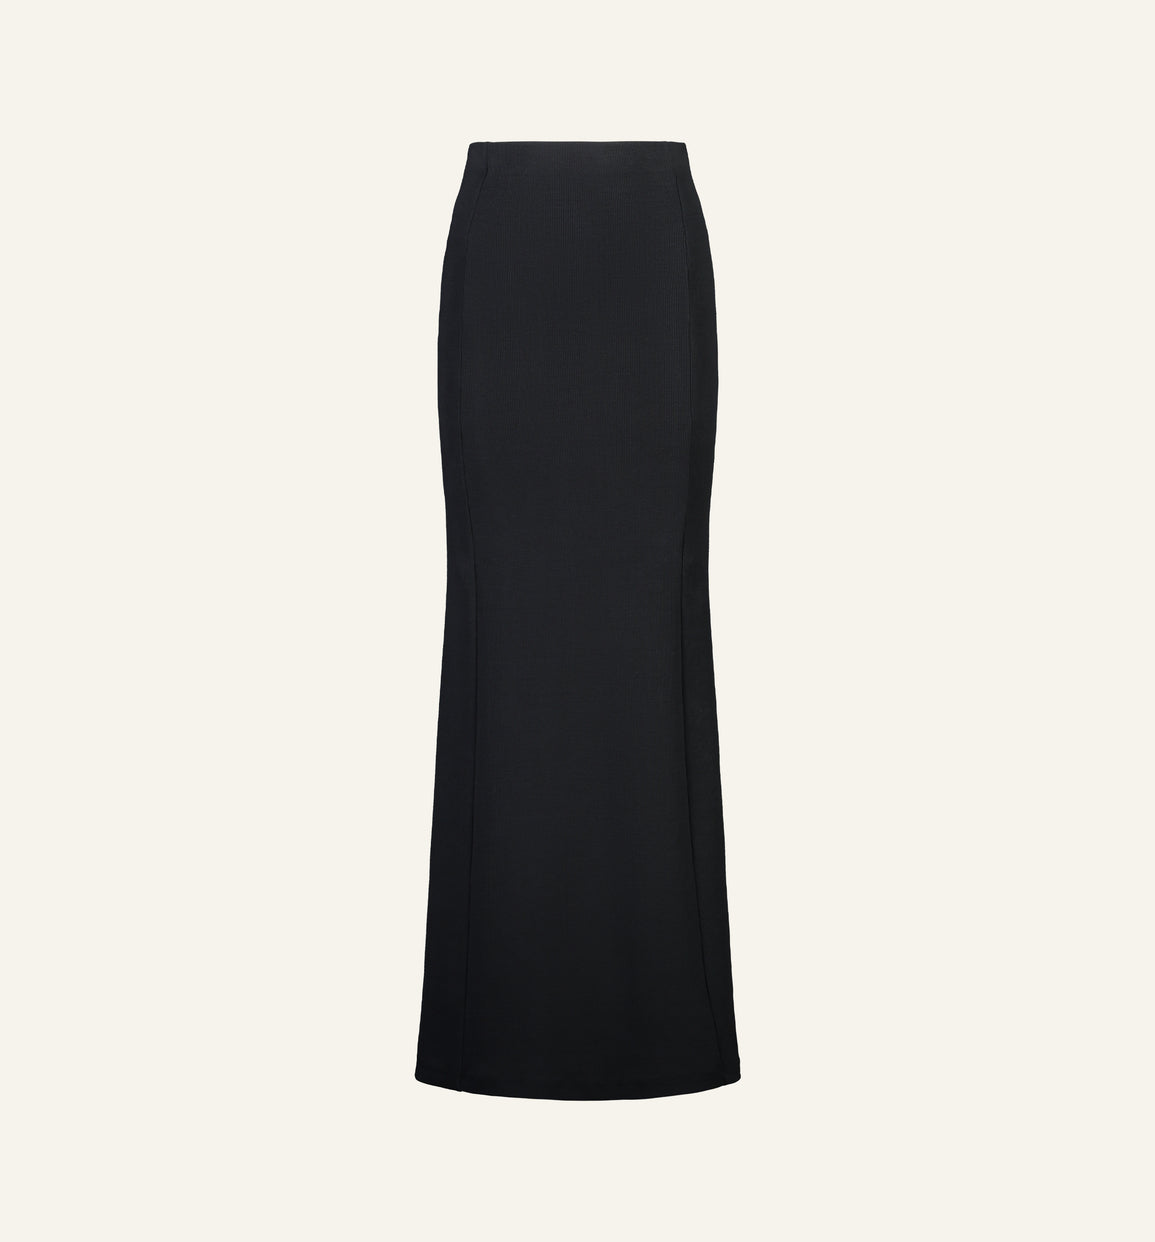 Bokeo - Panel Rib Skirt